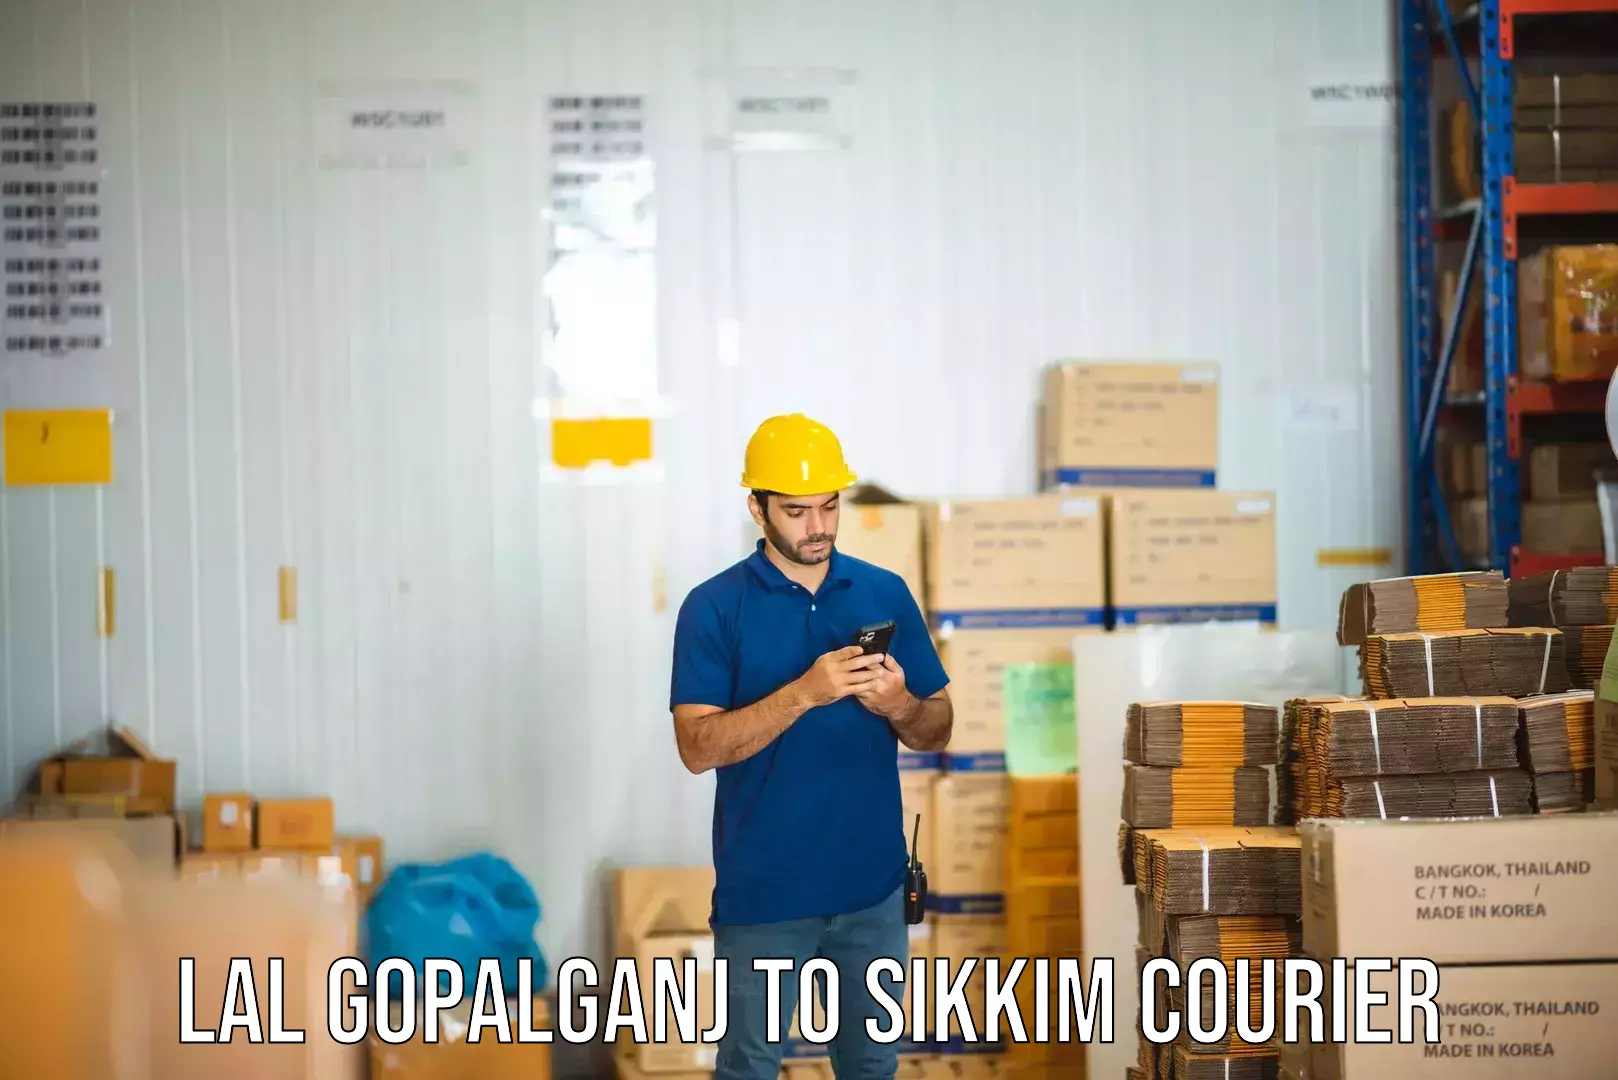 Shipping and handling Lal Gopalganj to Rangpo